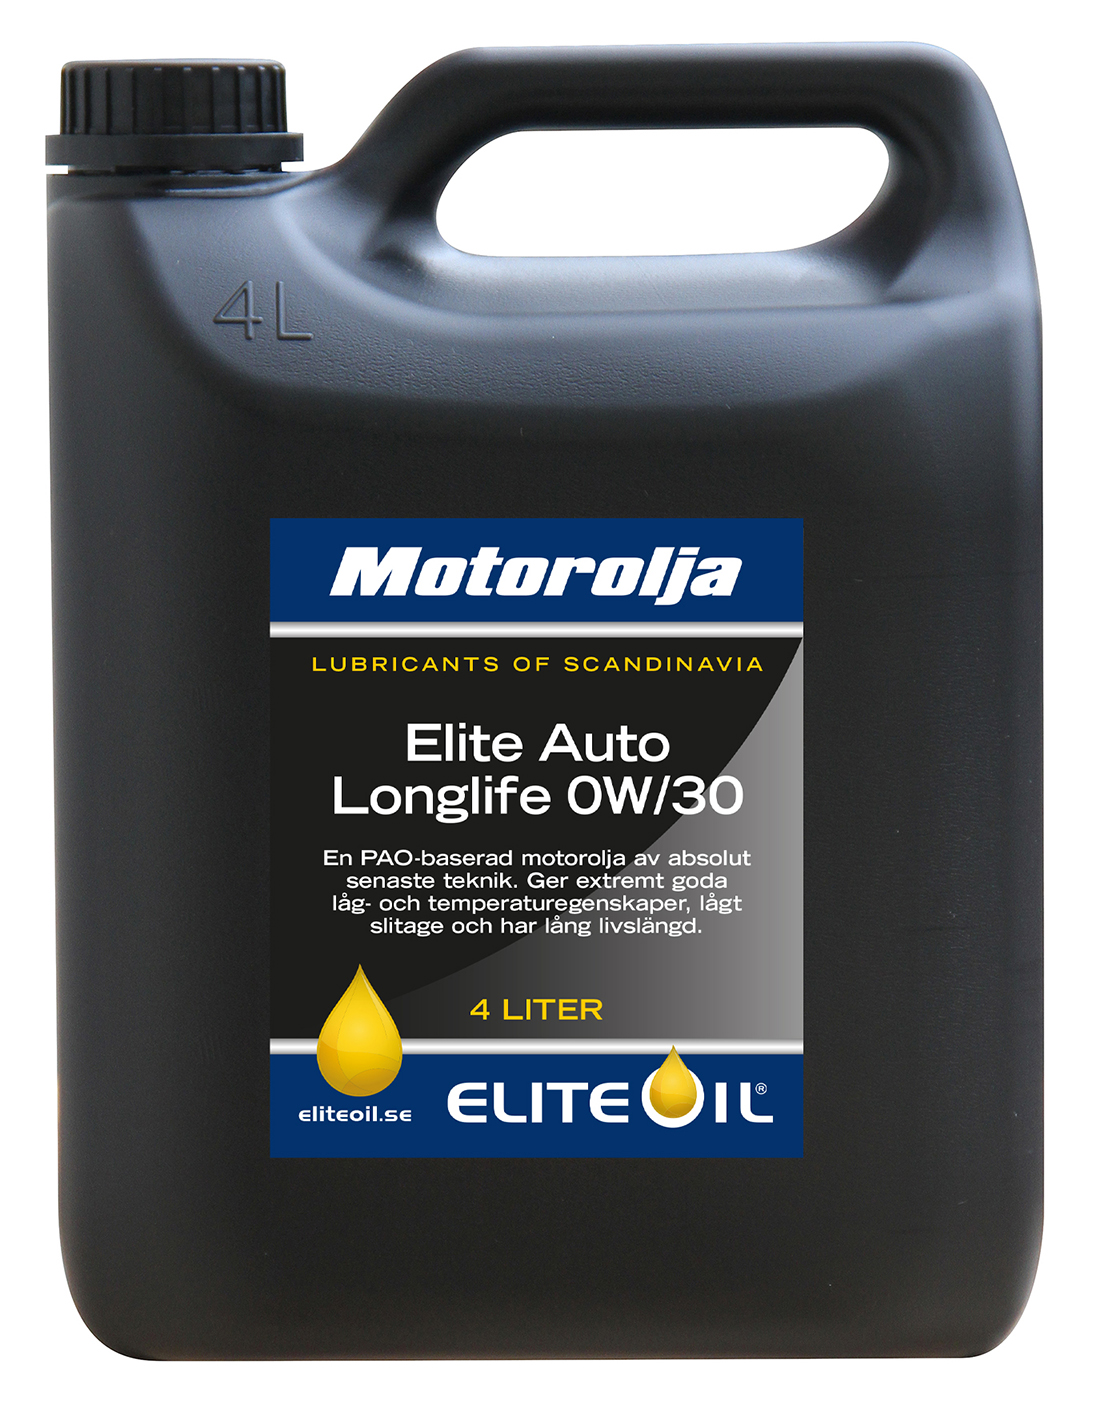 Elite Auto Longlife, 0W/30, 4 liter dunk-image